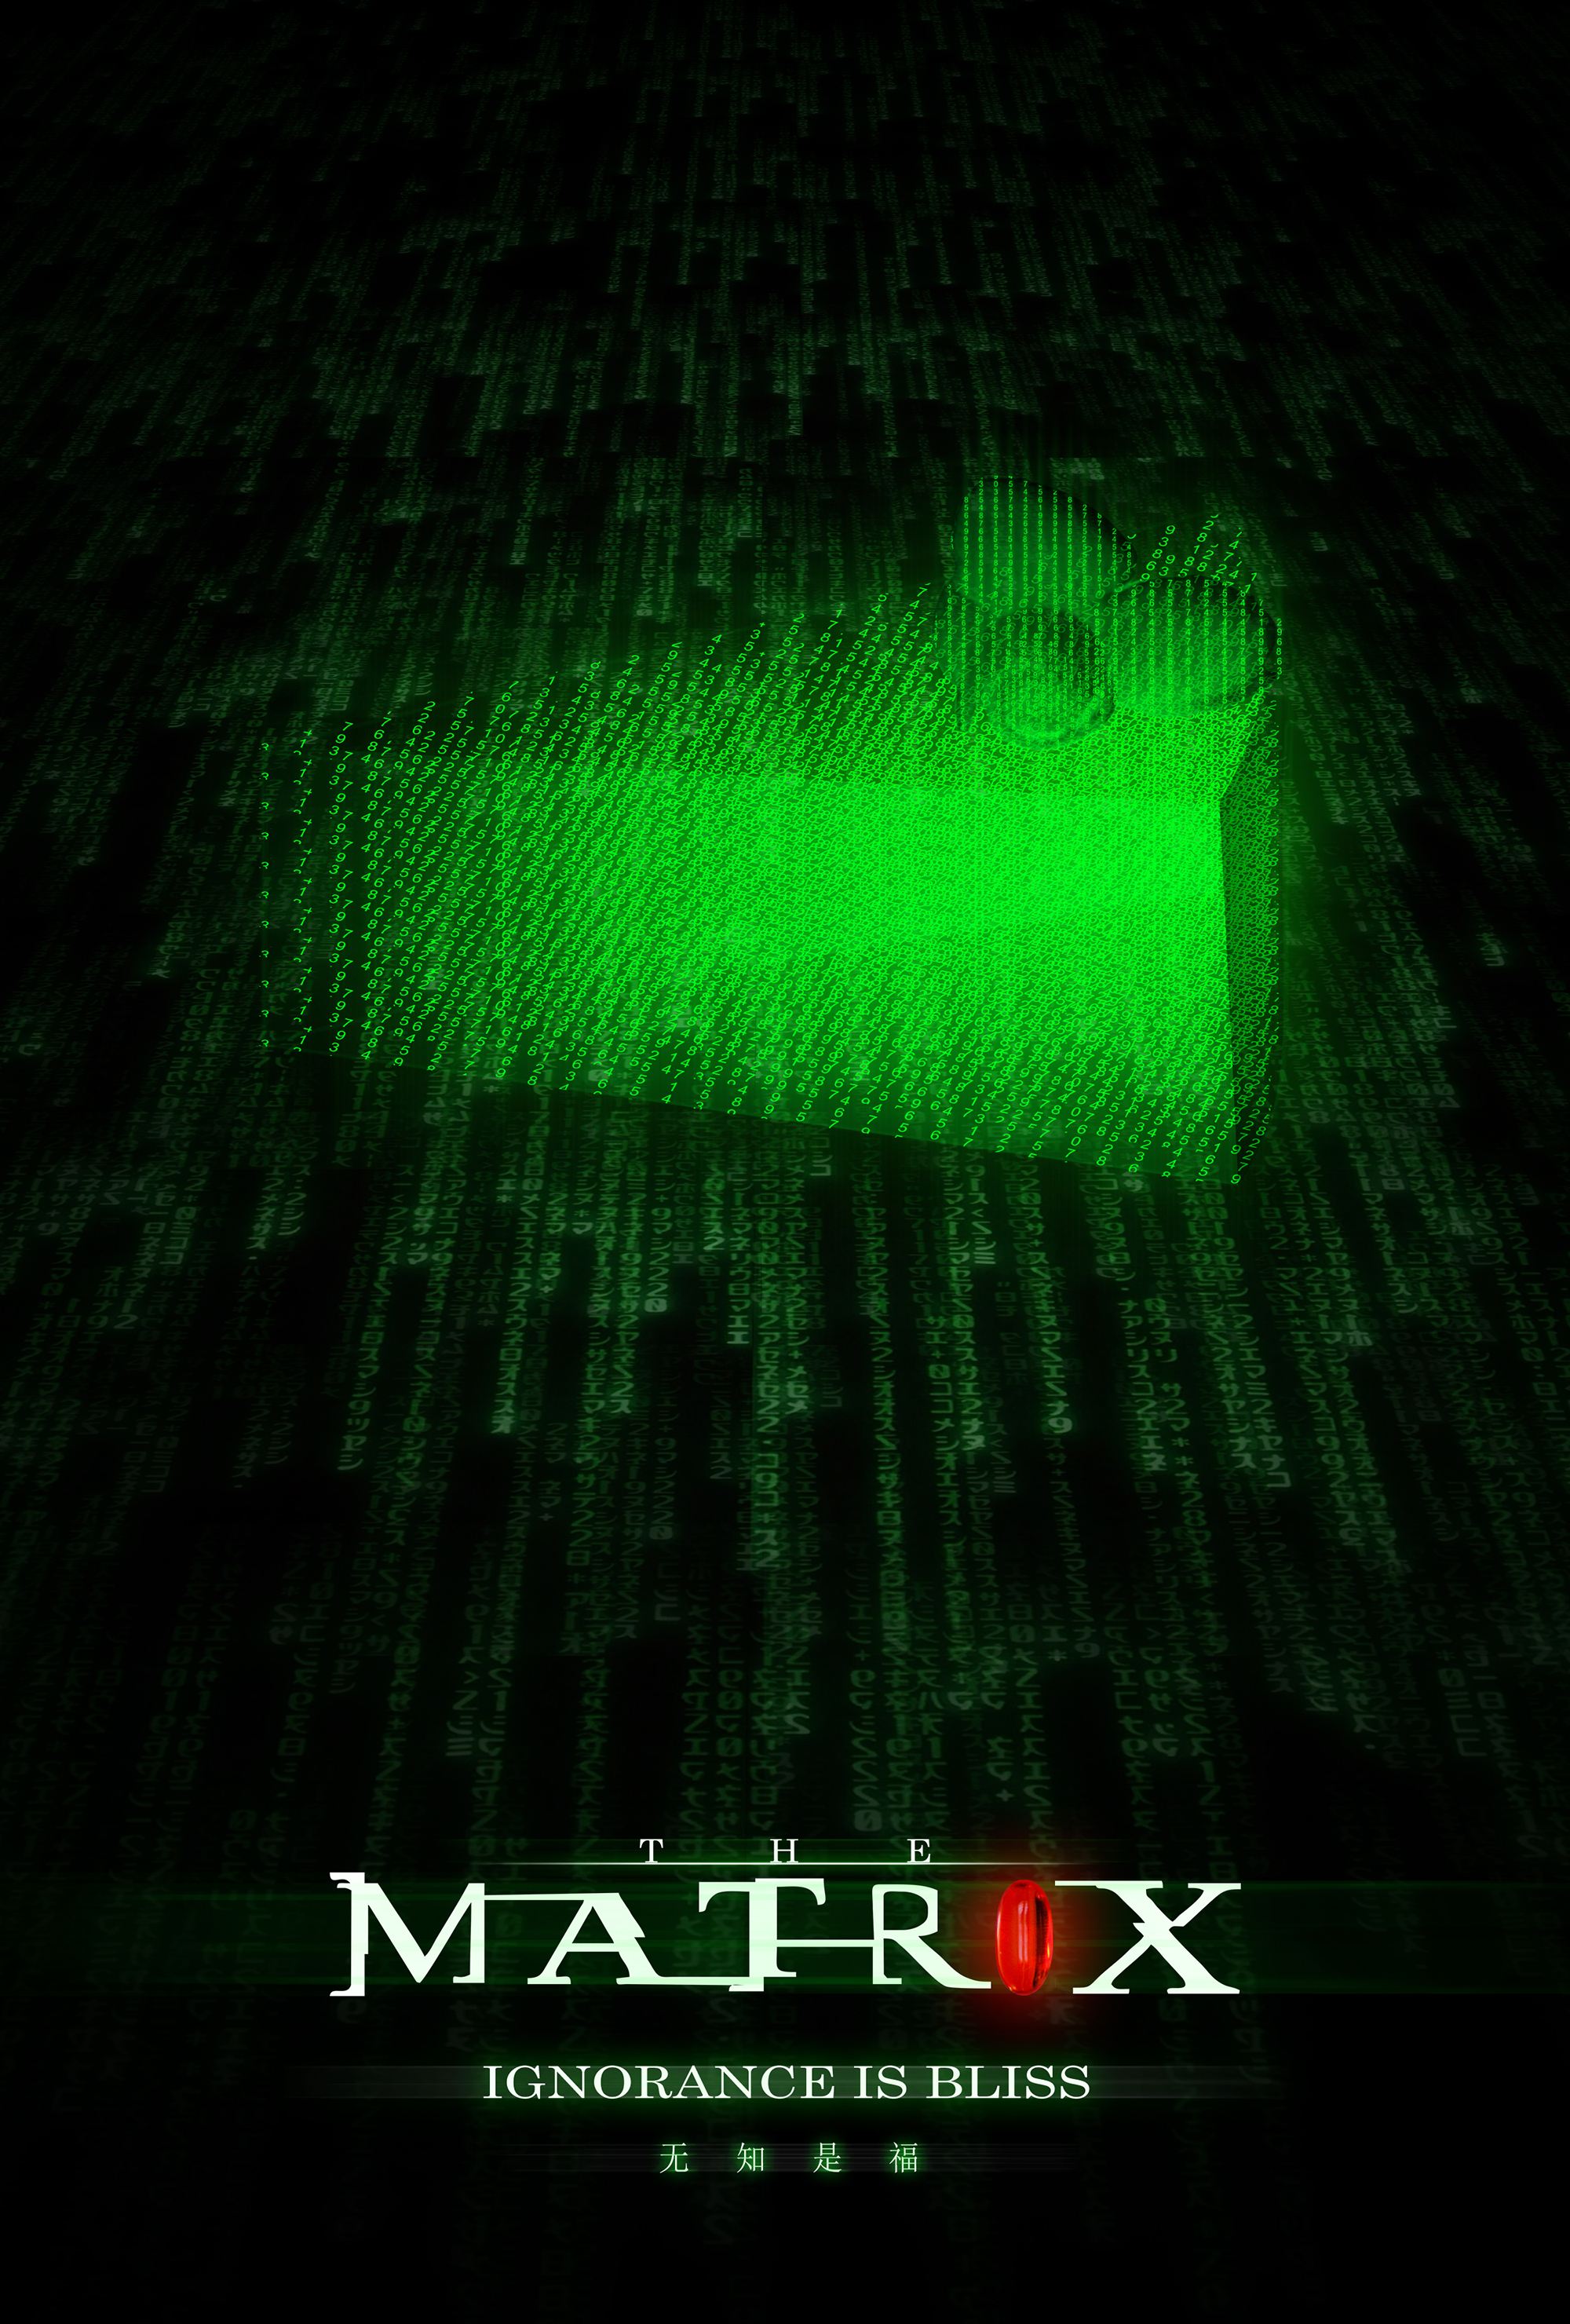 matrix黑客帝国(黑客帝国矩阵matrix)